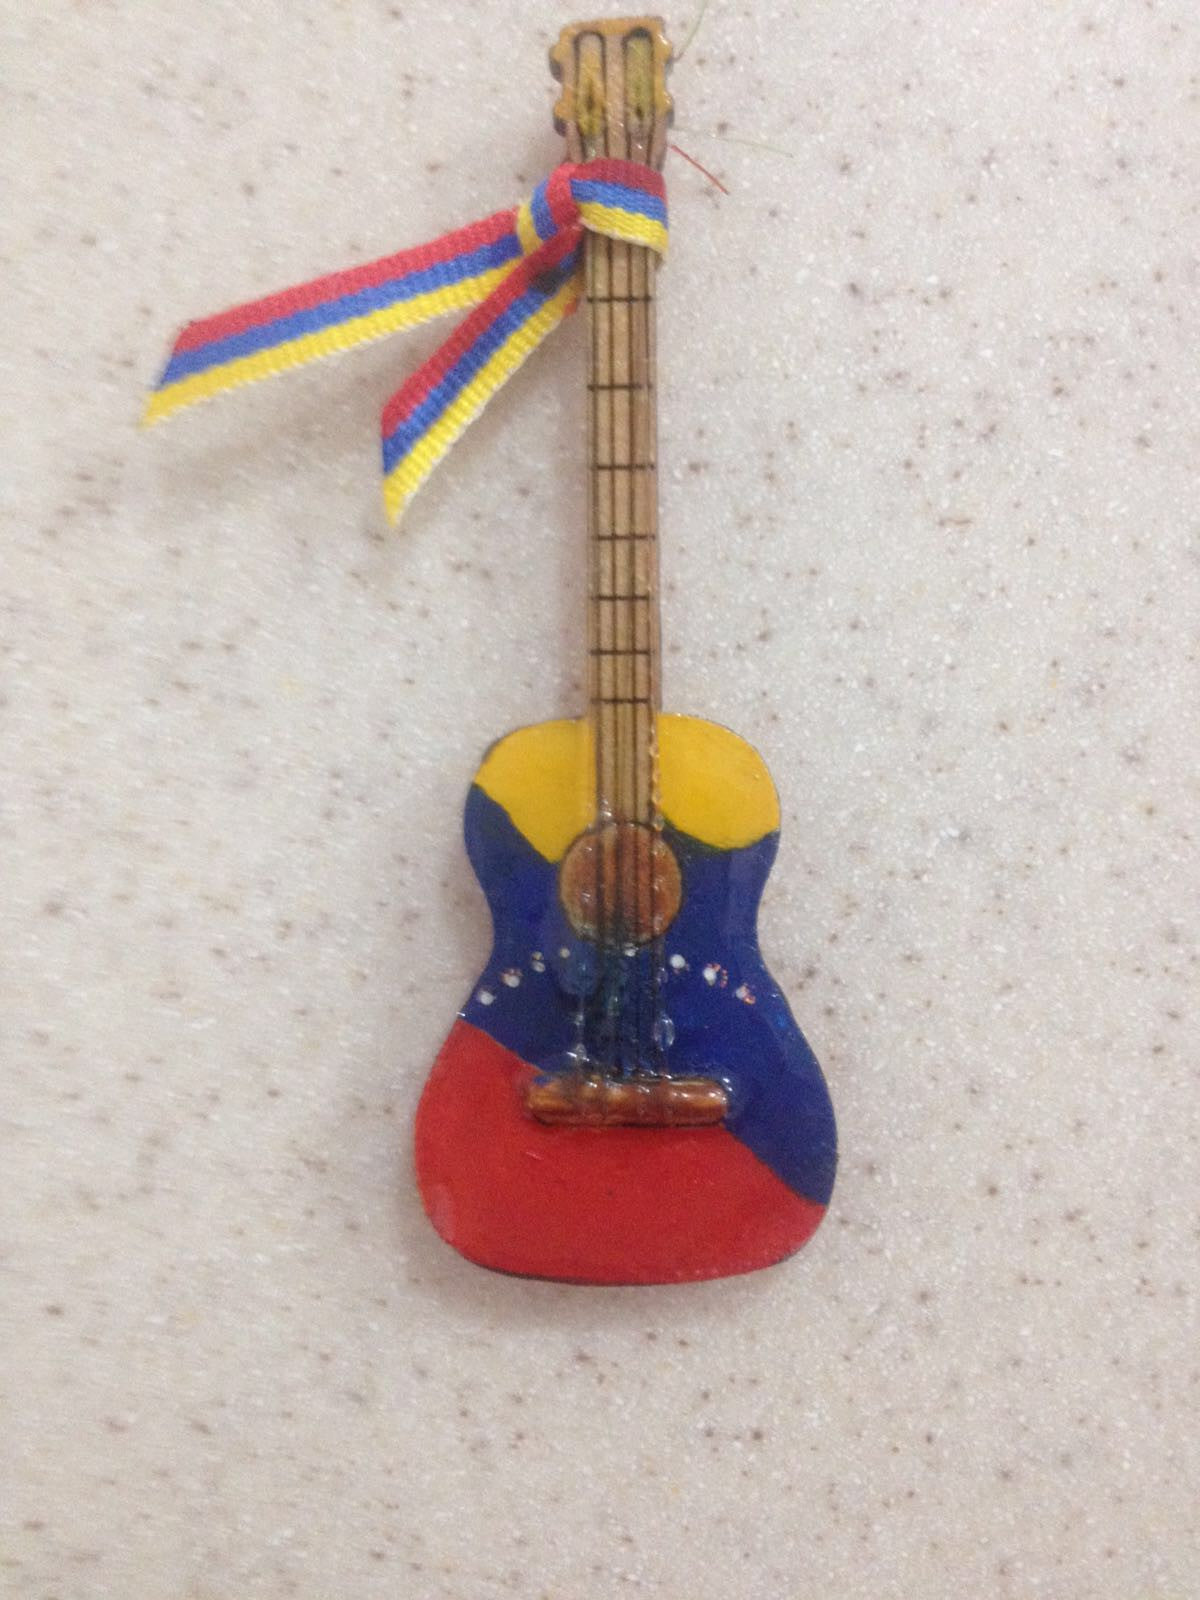 Cute and Captivating Mini Instrument Fridge Magnet painted with Venezuelan Flag